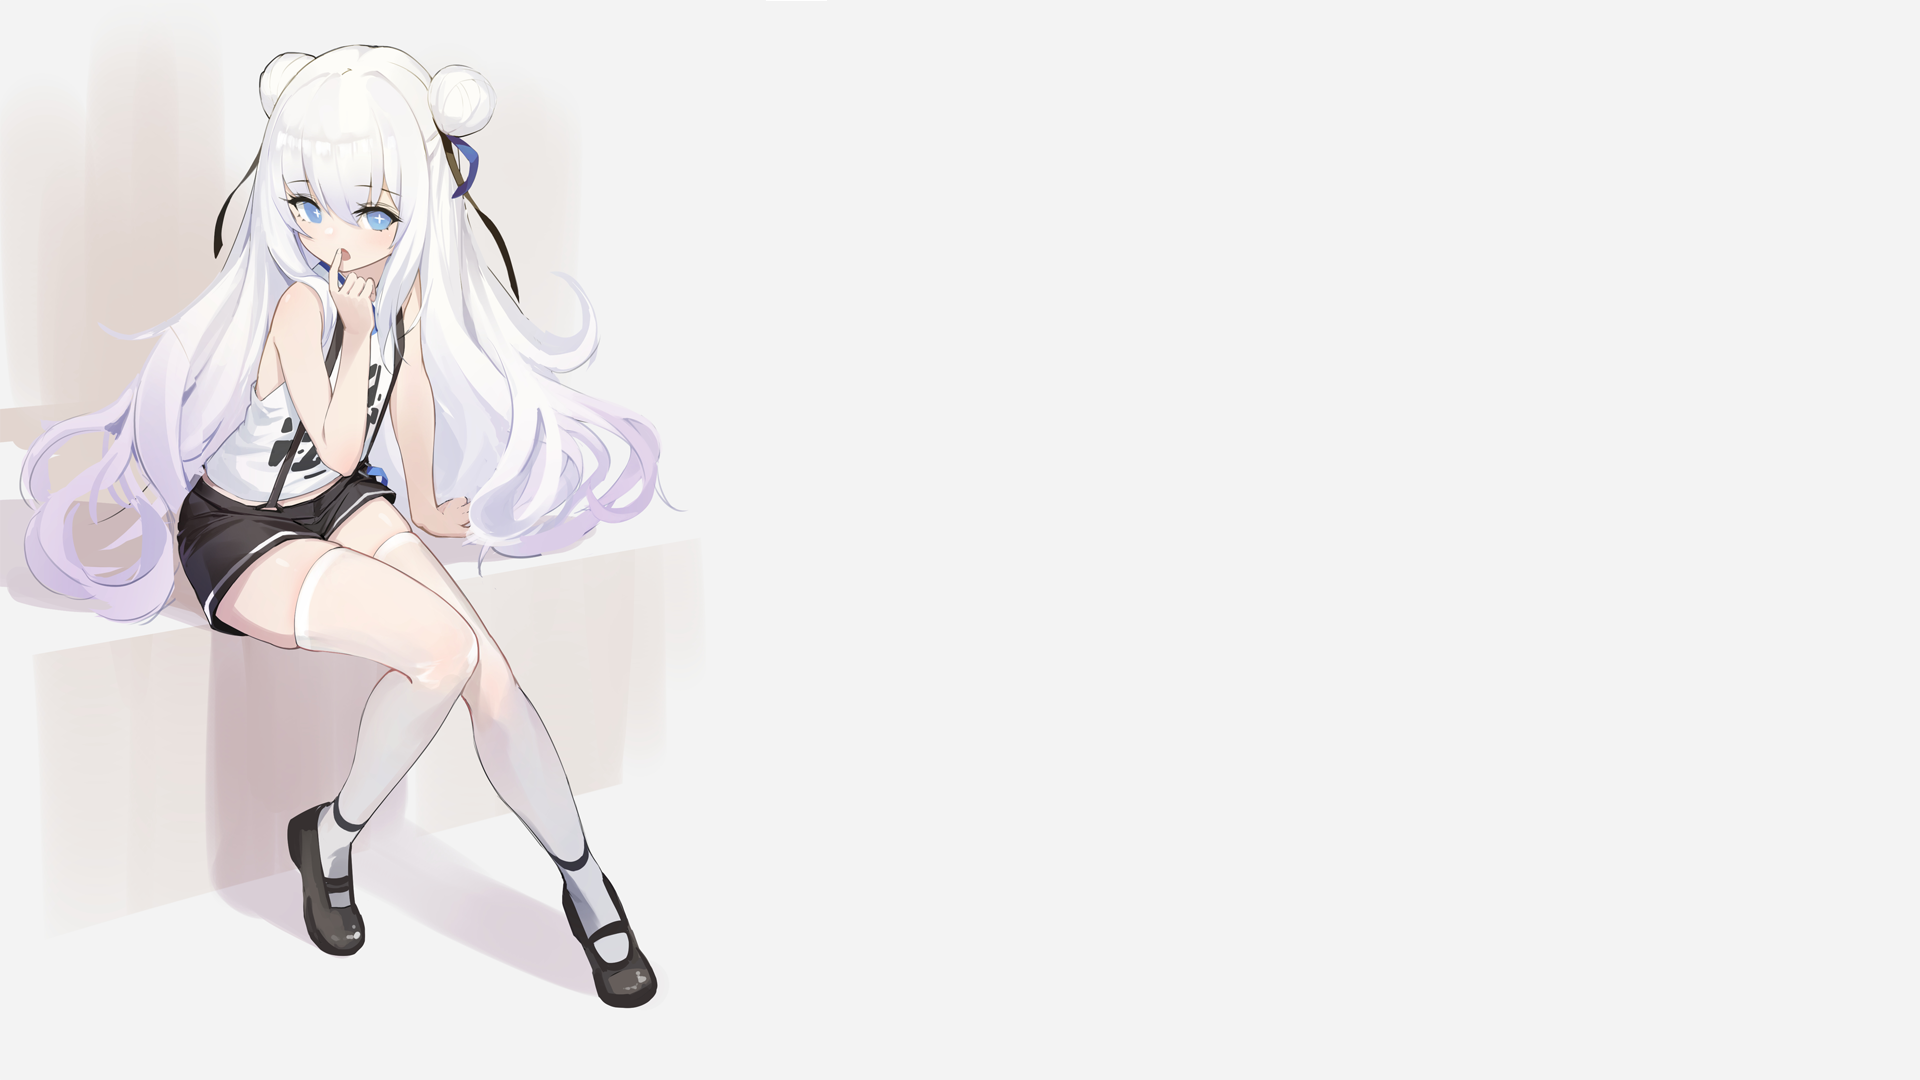 Anime 1920x1080 anime anime girls simple background Azur Lane white hair sitting stockings thighs zettai ryouiki schoolgirl thigh-highs short shorts